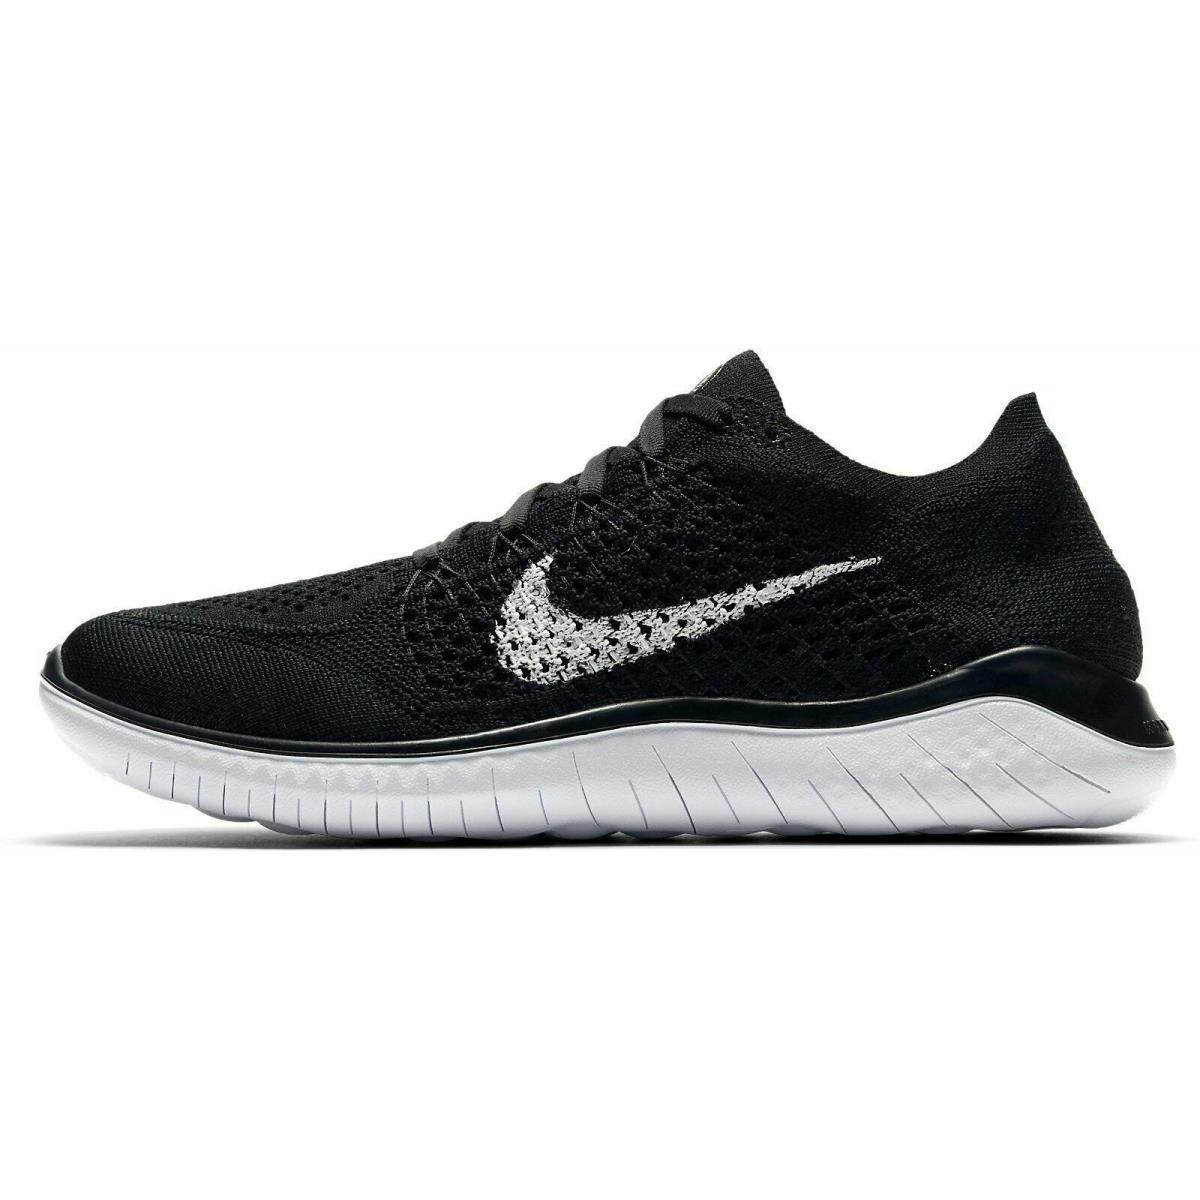 Wmns Nike Free RN Flyknit Running Shoes Blk/wht 942839-001 US Sz 7.5-11.5 - Black / White